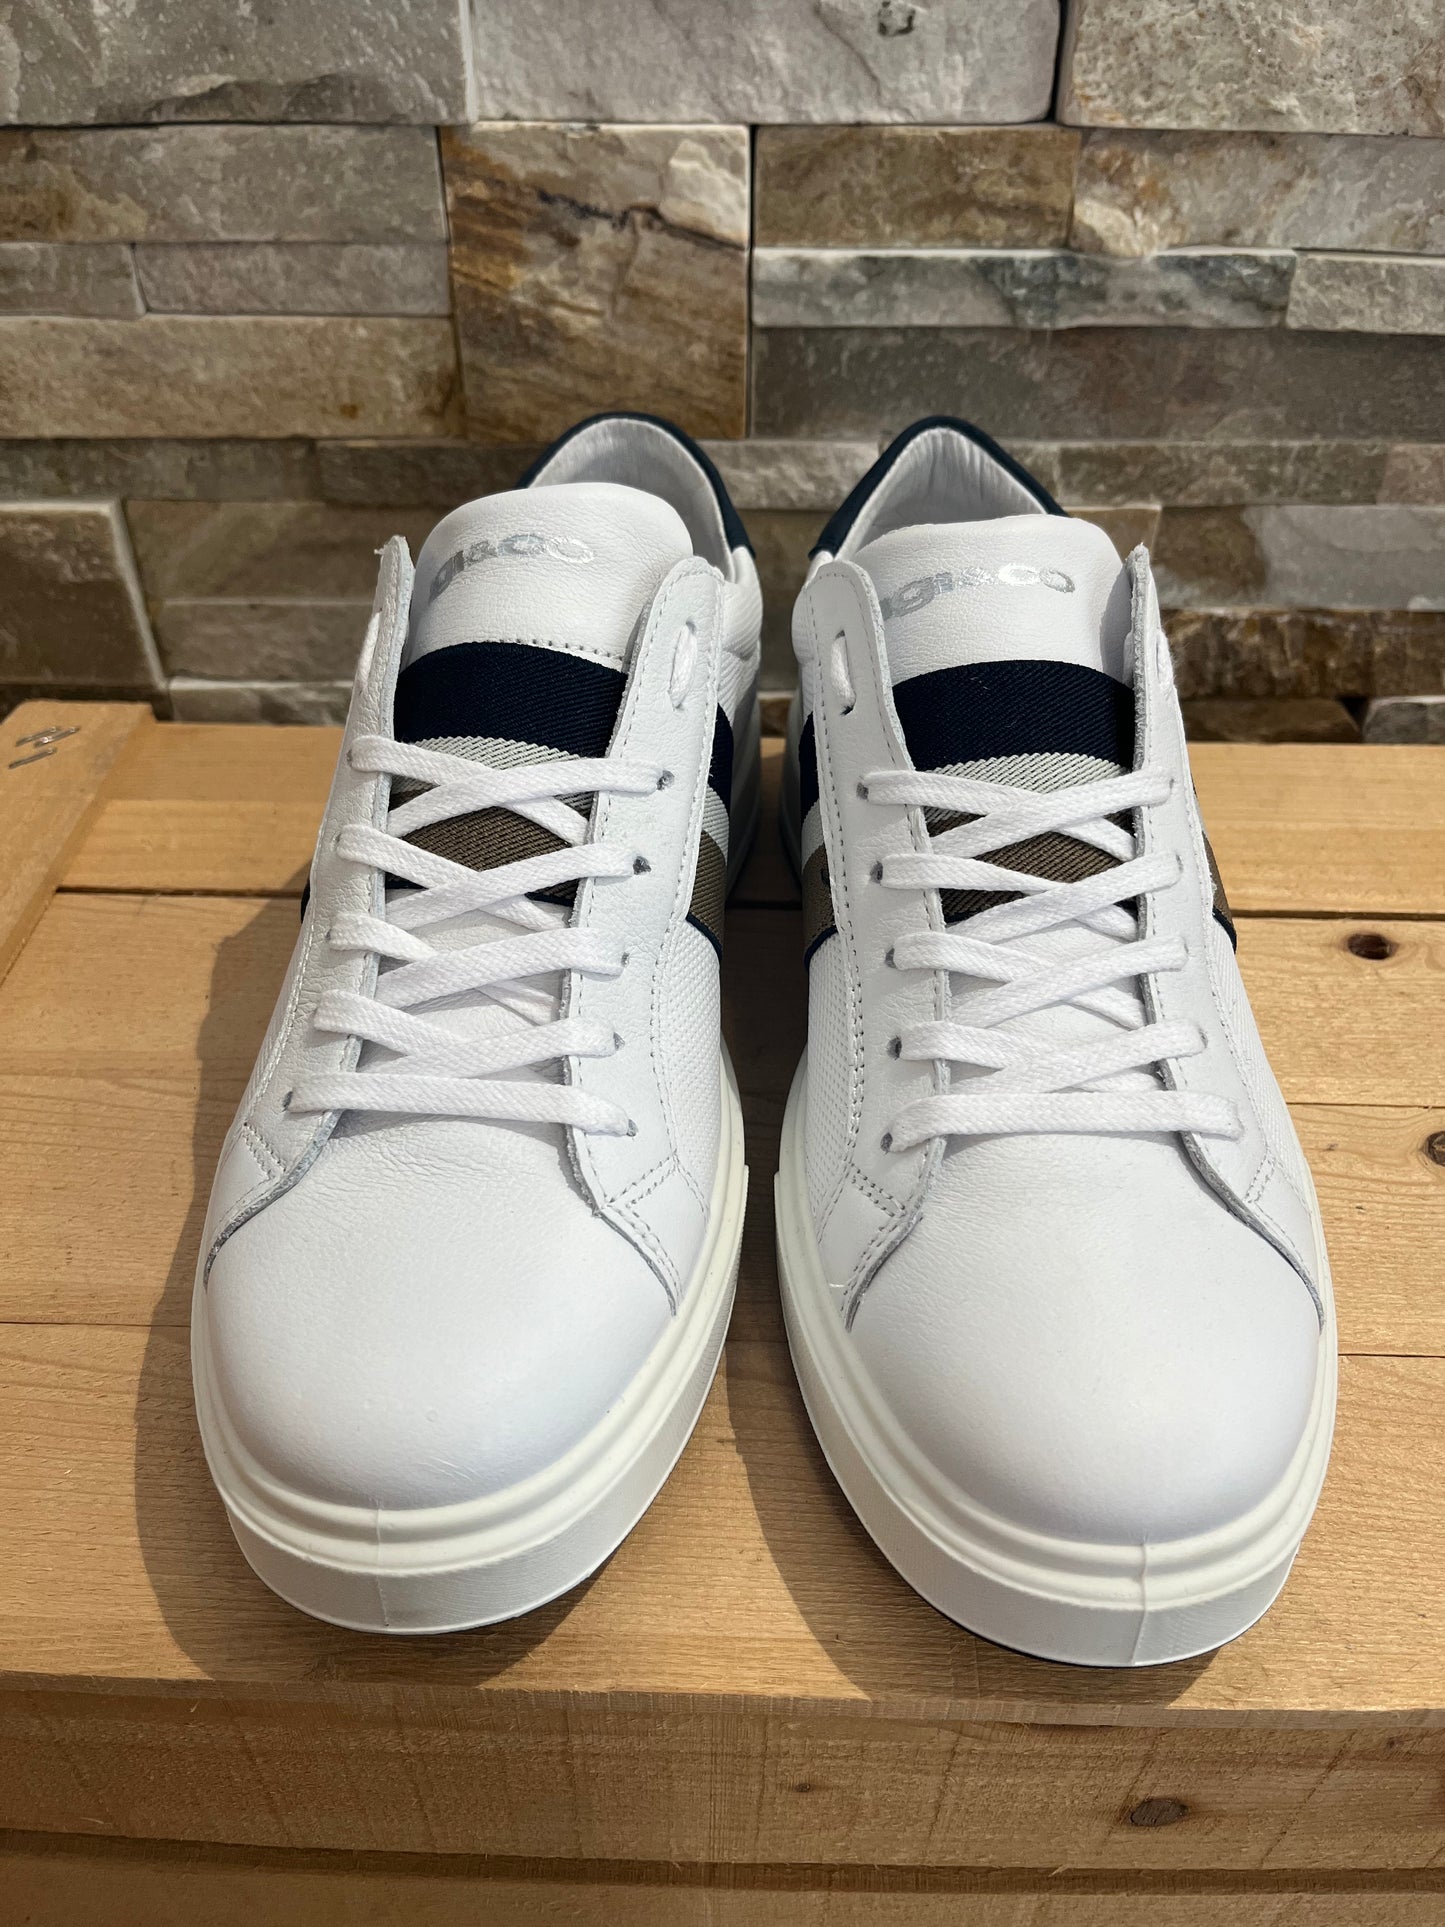 Sneakers Uomo - IGI & CO - Calzature principe